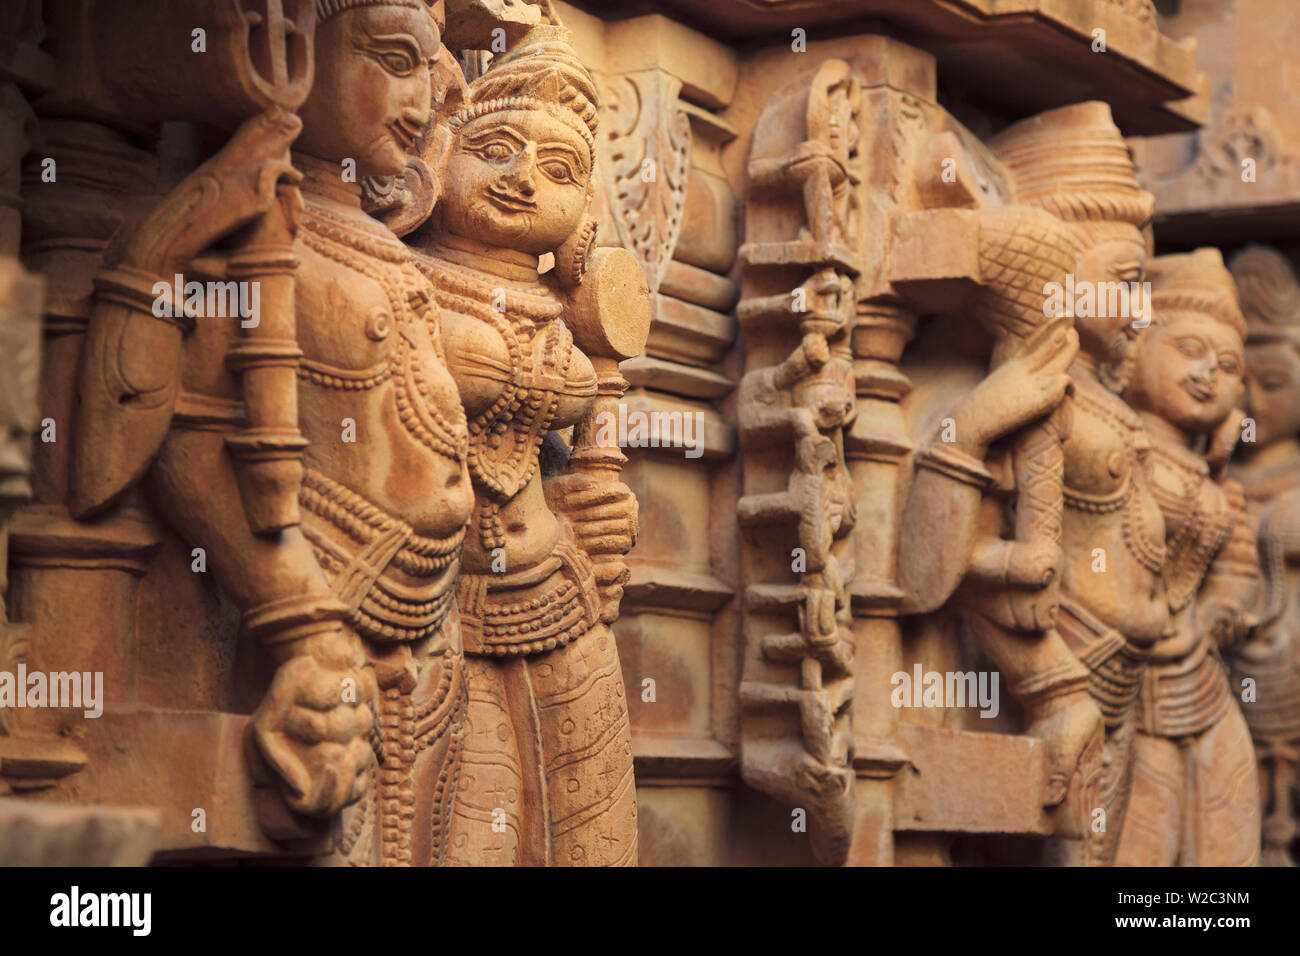 La India, Rajastán, Jaisalmer, Jaisalmer Fort, Jain temple, talla de piedra detalle Foto de stock